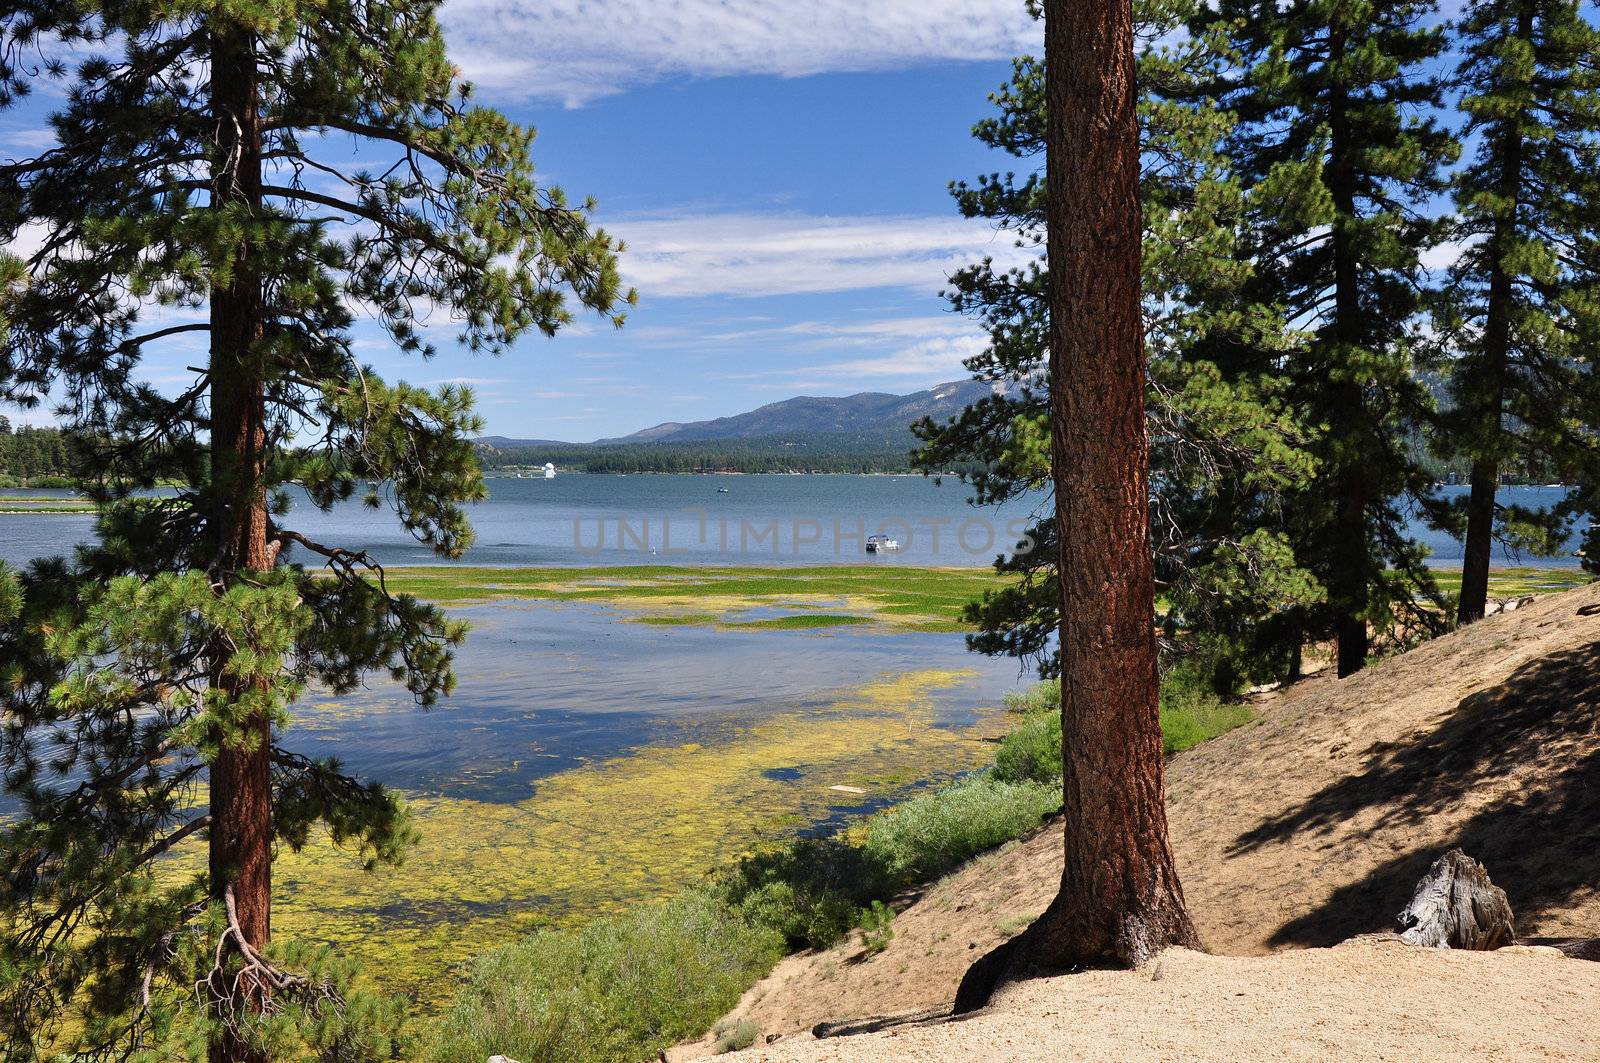 Pine trees grow along the shoreline of Big Bear Lake in Southern California.